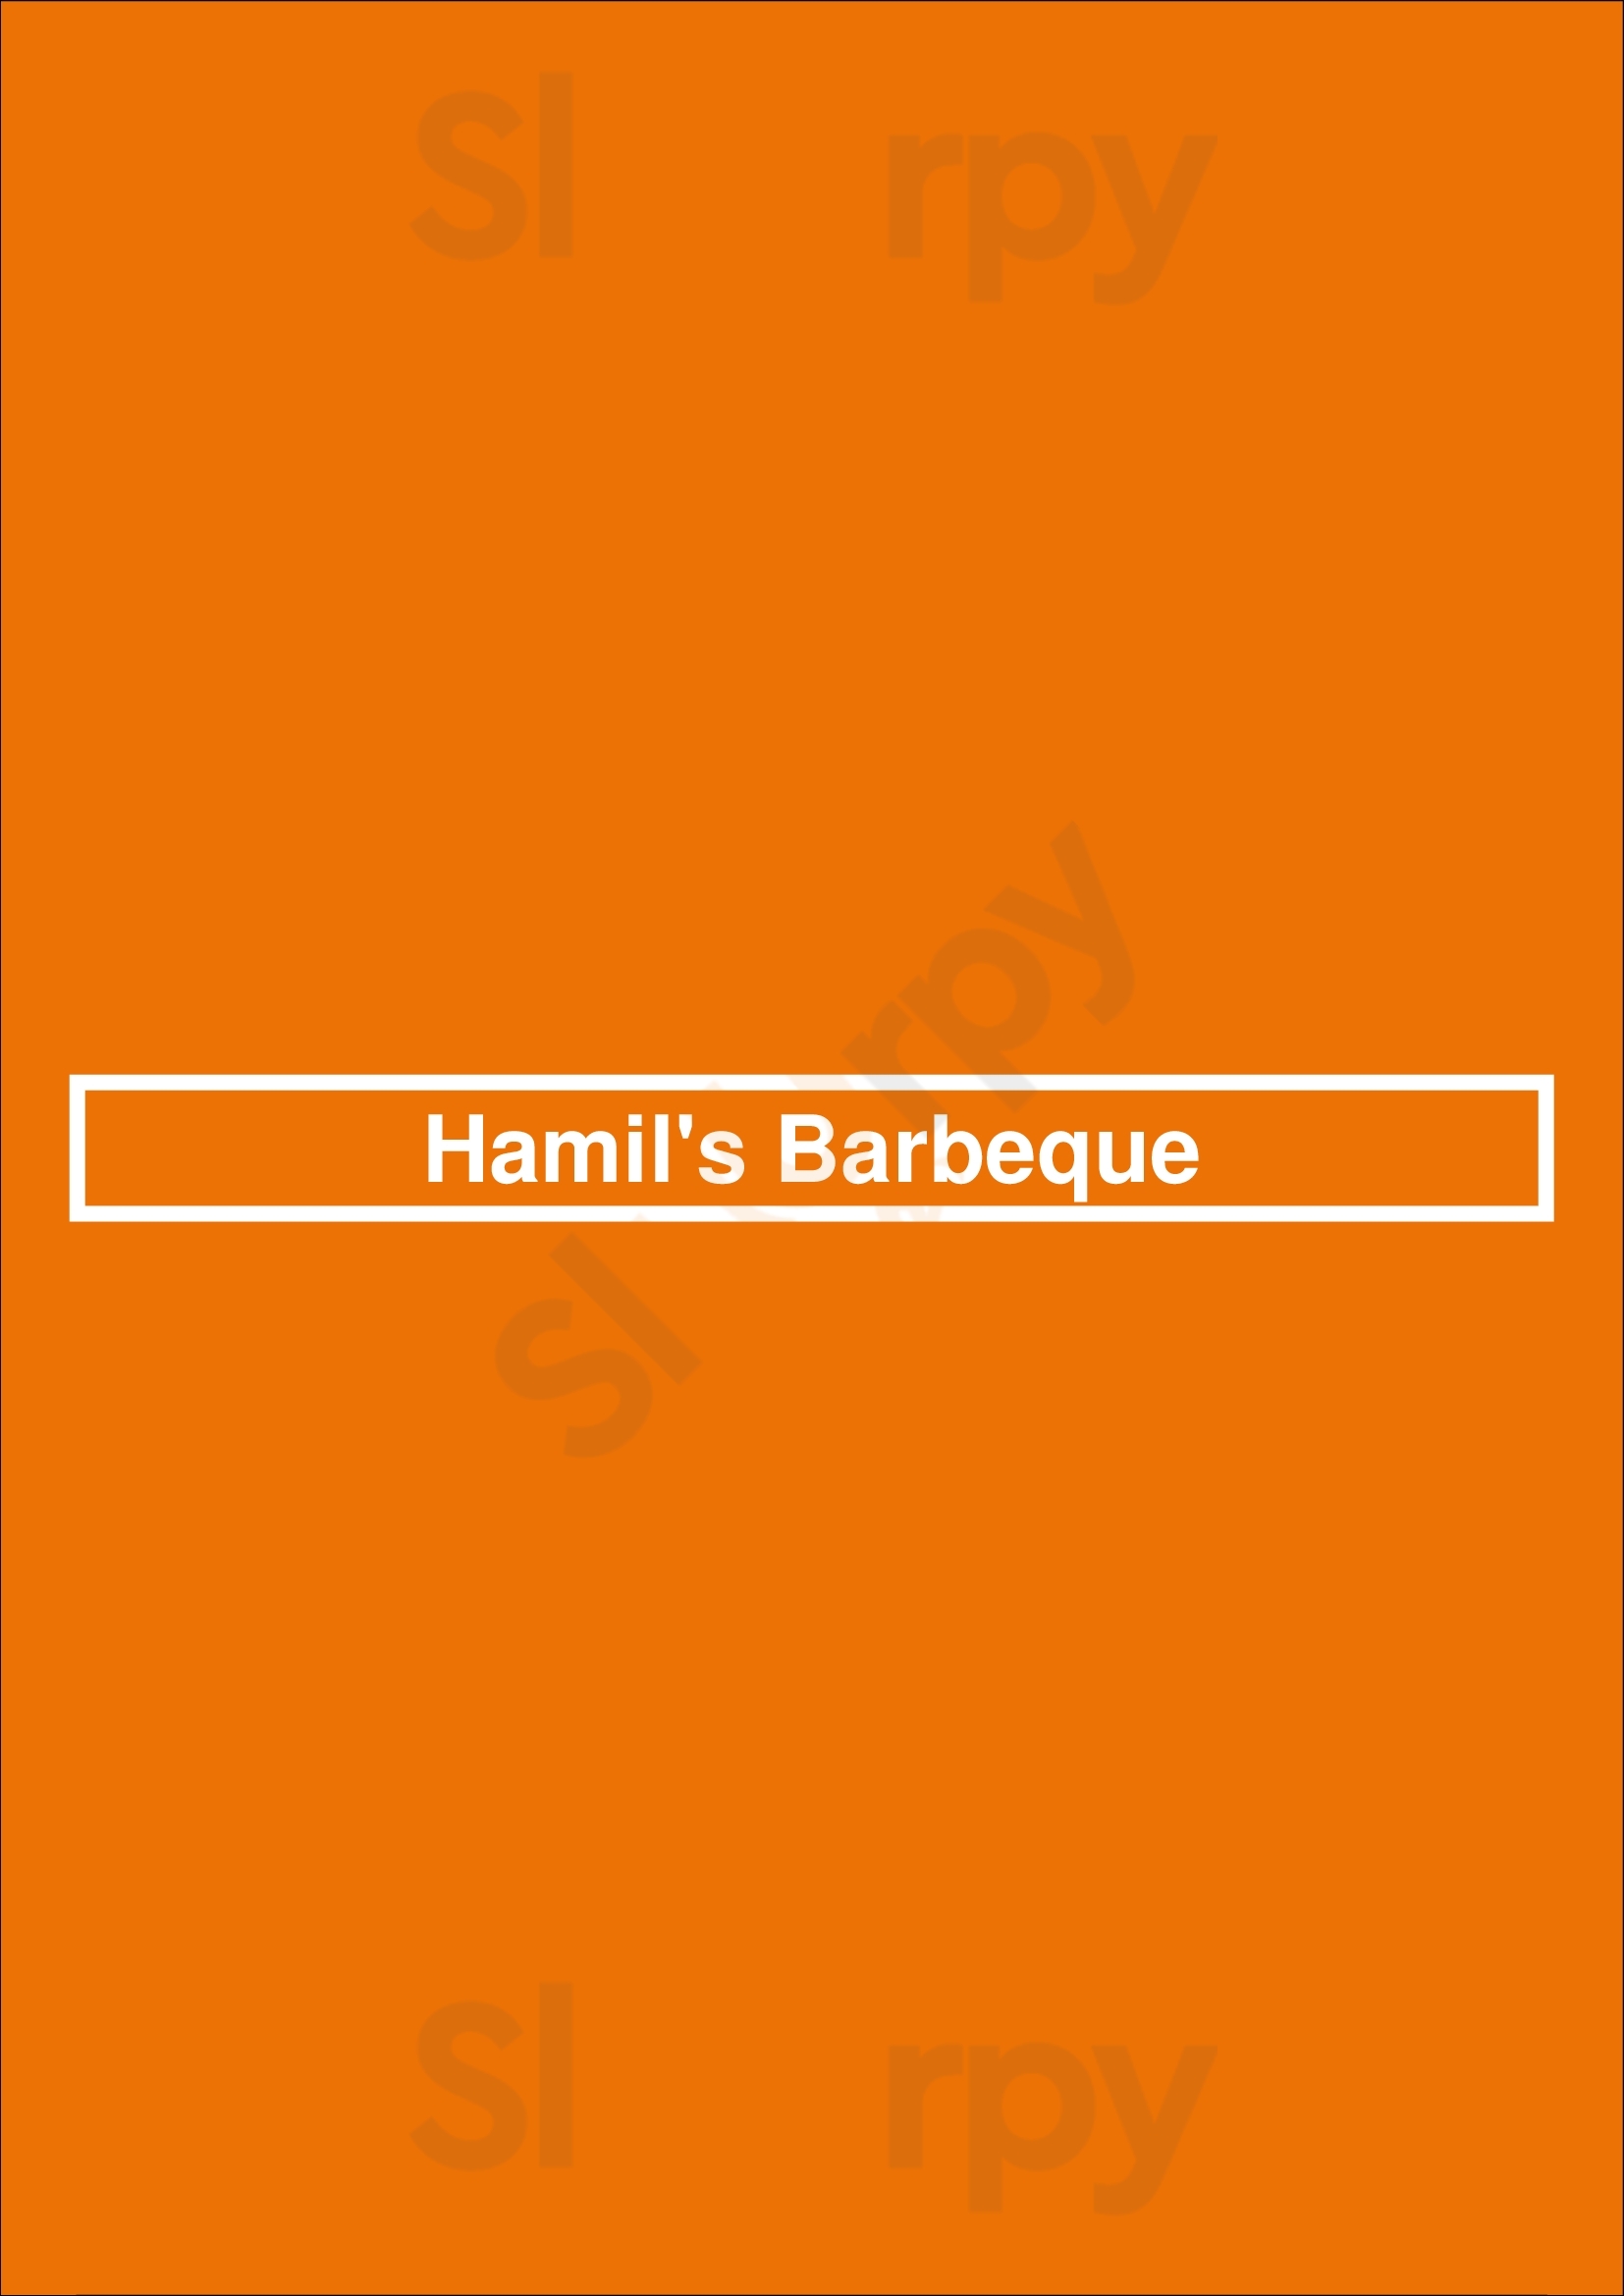 Hamil's Barbeque Madison Menu - 1